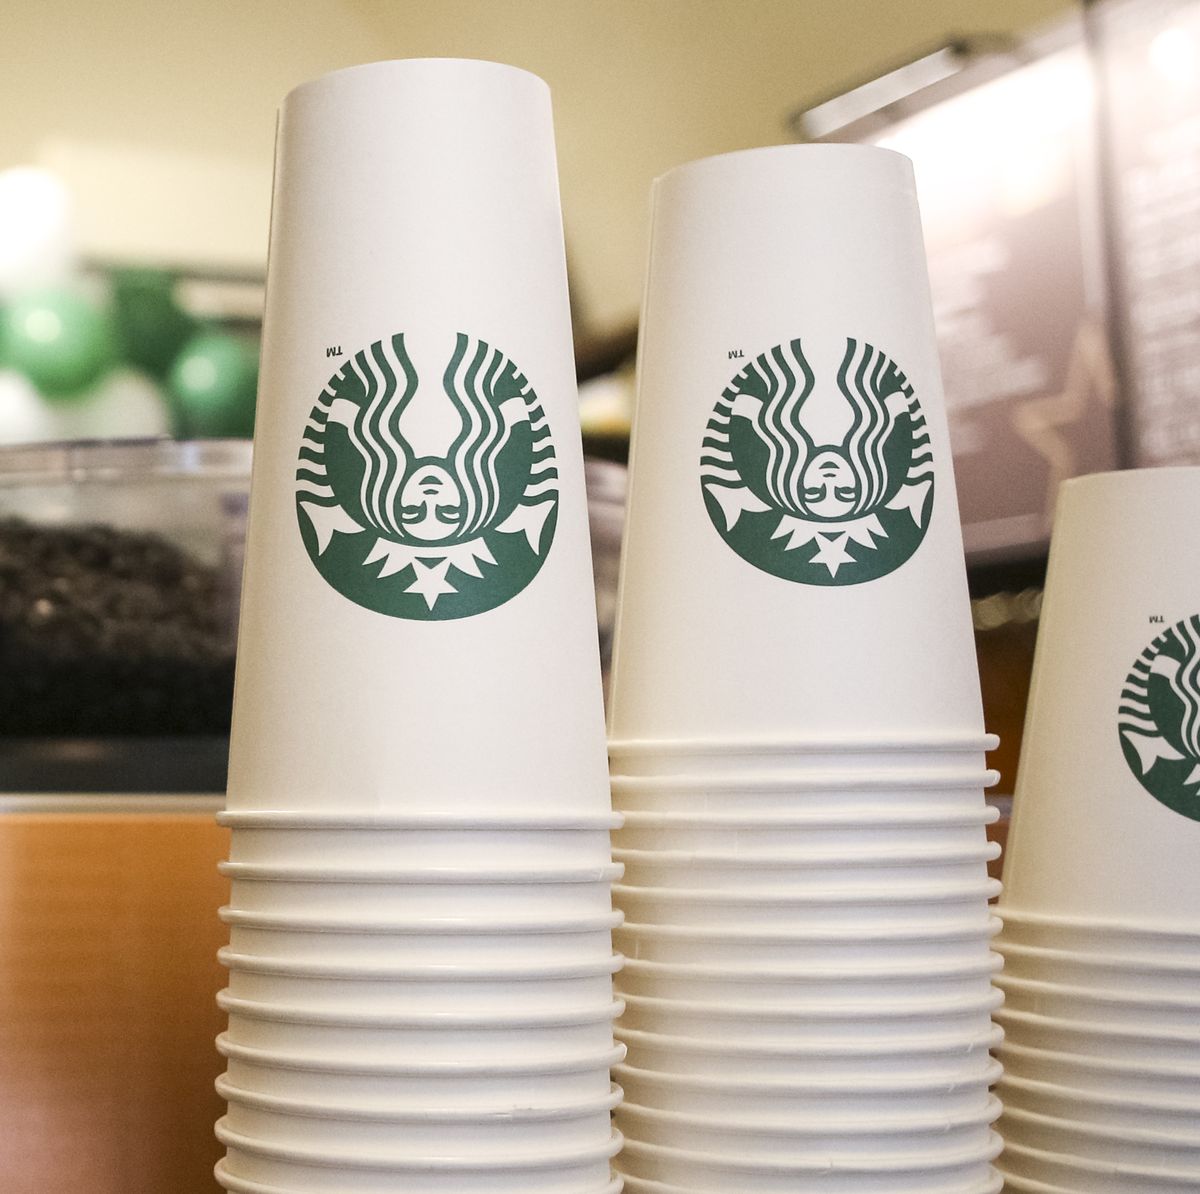 How Big Is Each Starbucks Drink? — Starbucks Drink Size Guide